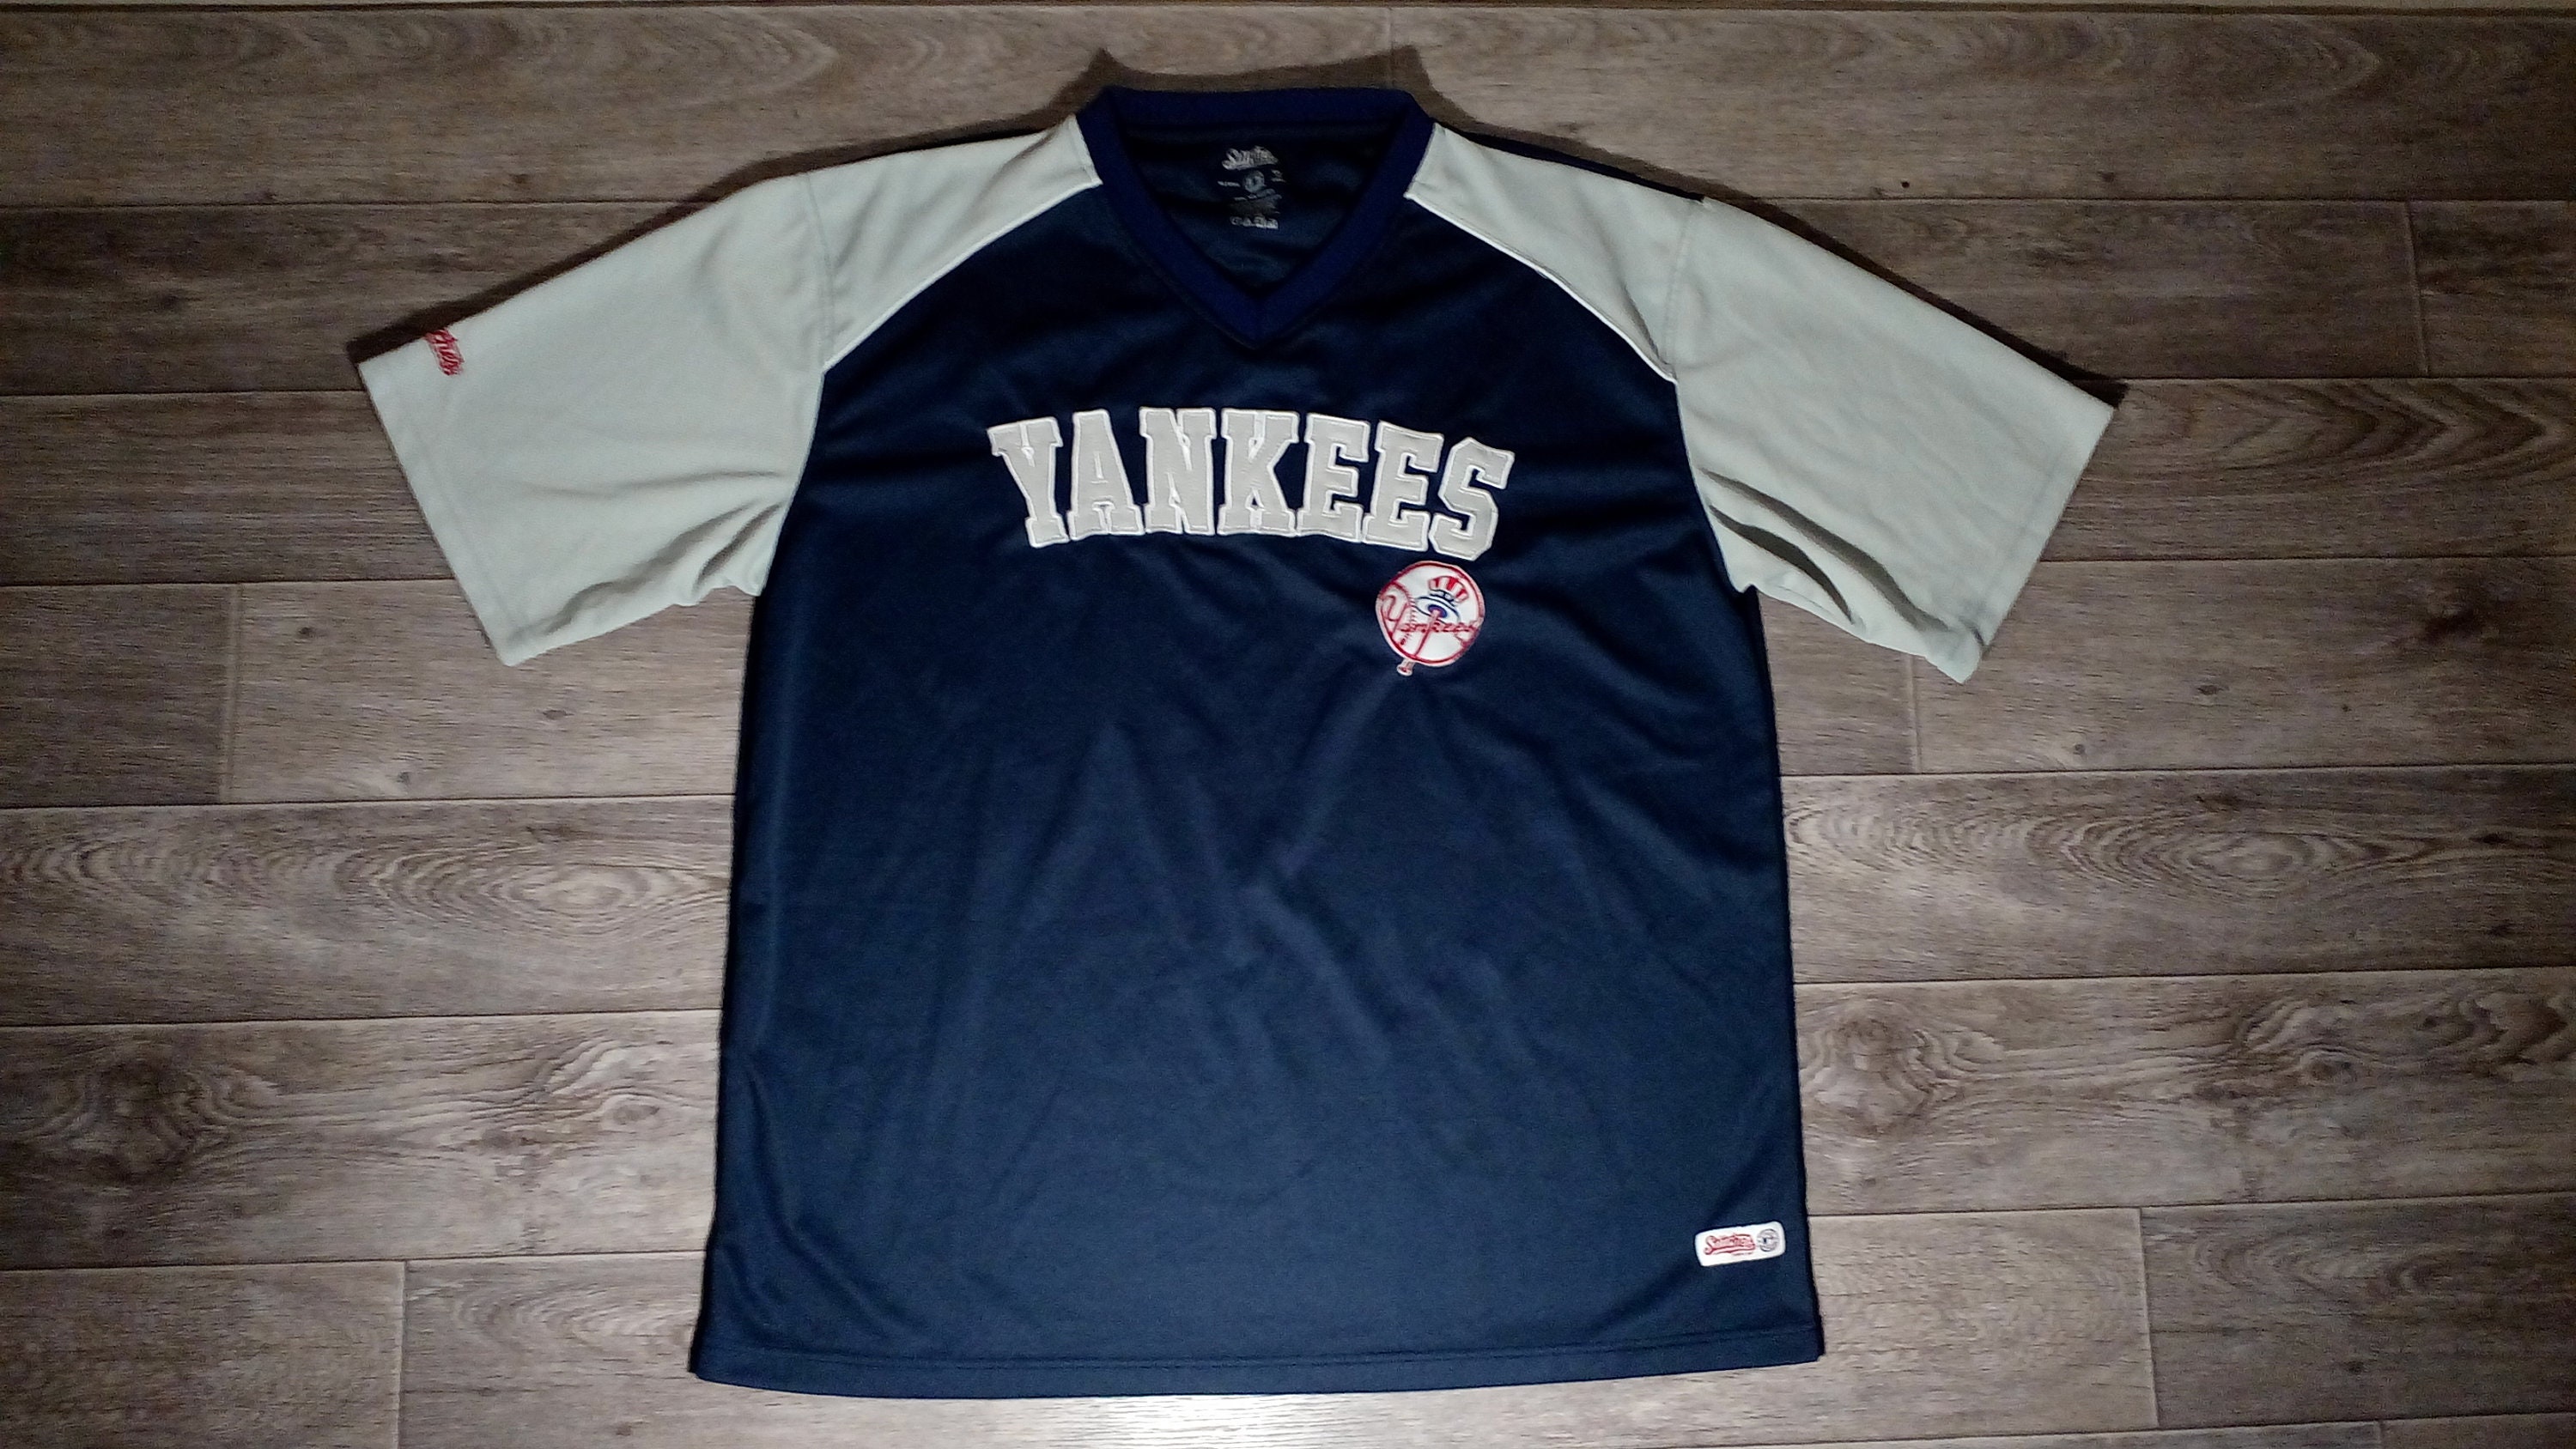 SportsVintageStuff New York Yankees USA American Baseball Team Stitches Men's Sports Uniform Jersey Shirt Knitwear Wear Size XL/2XL